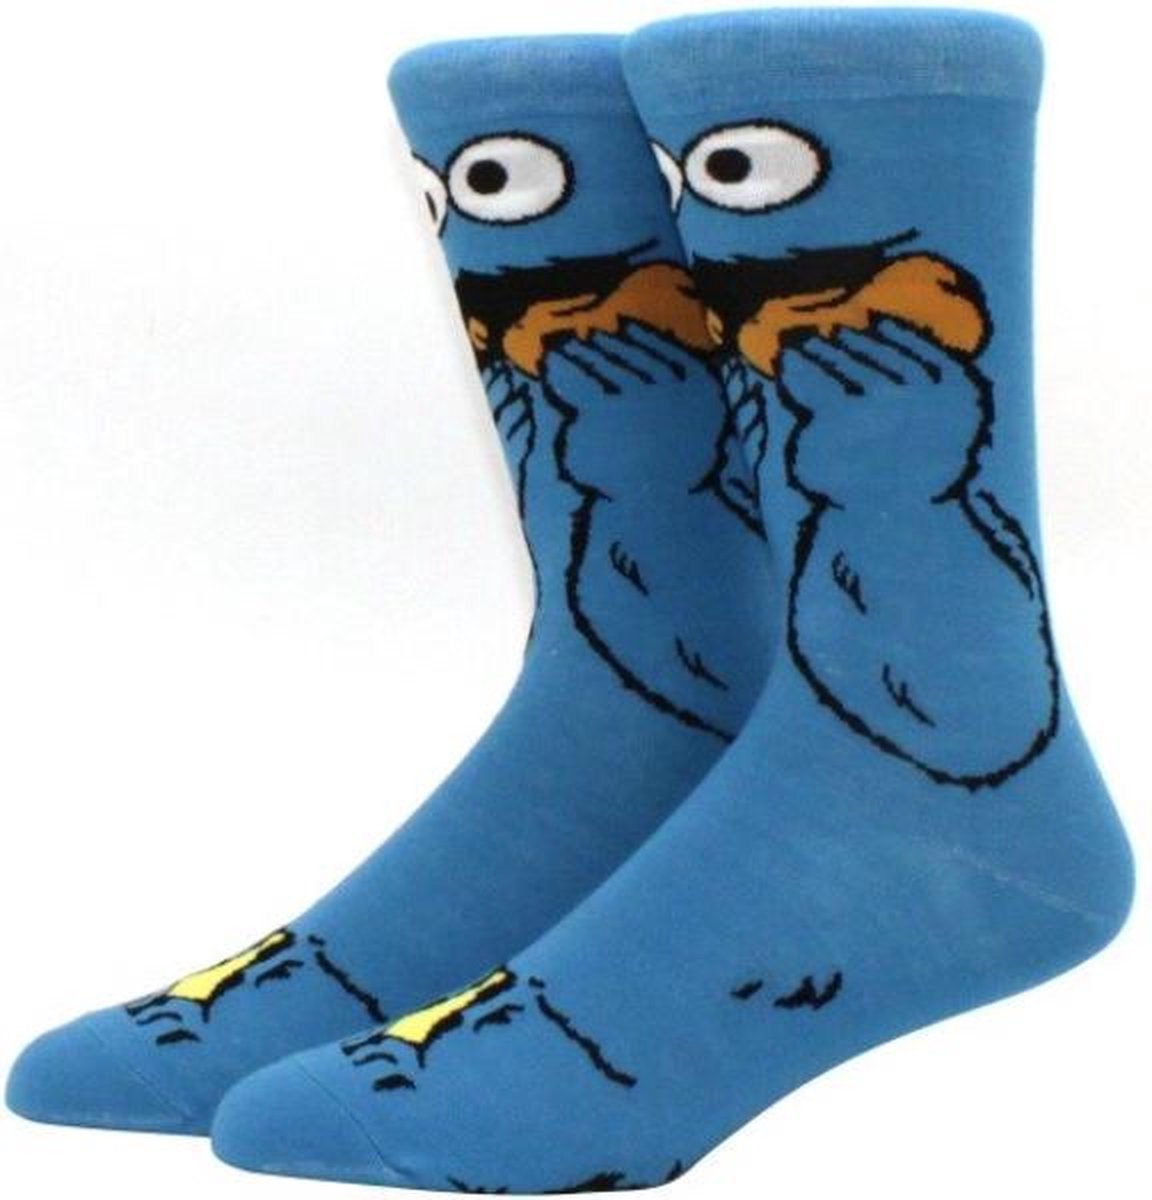 Fun sokken 'Cookie Monster' (91133) | bol.com